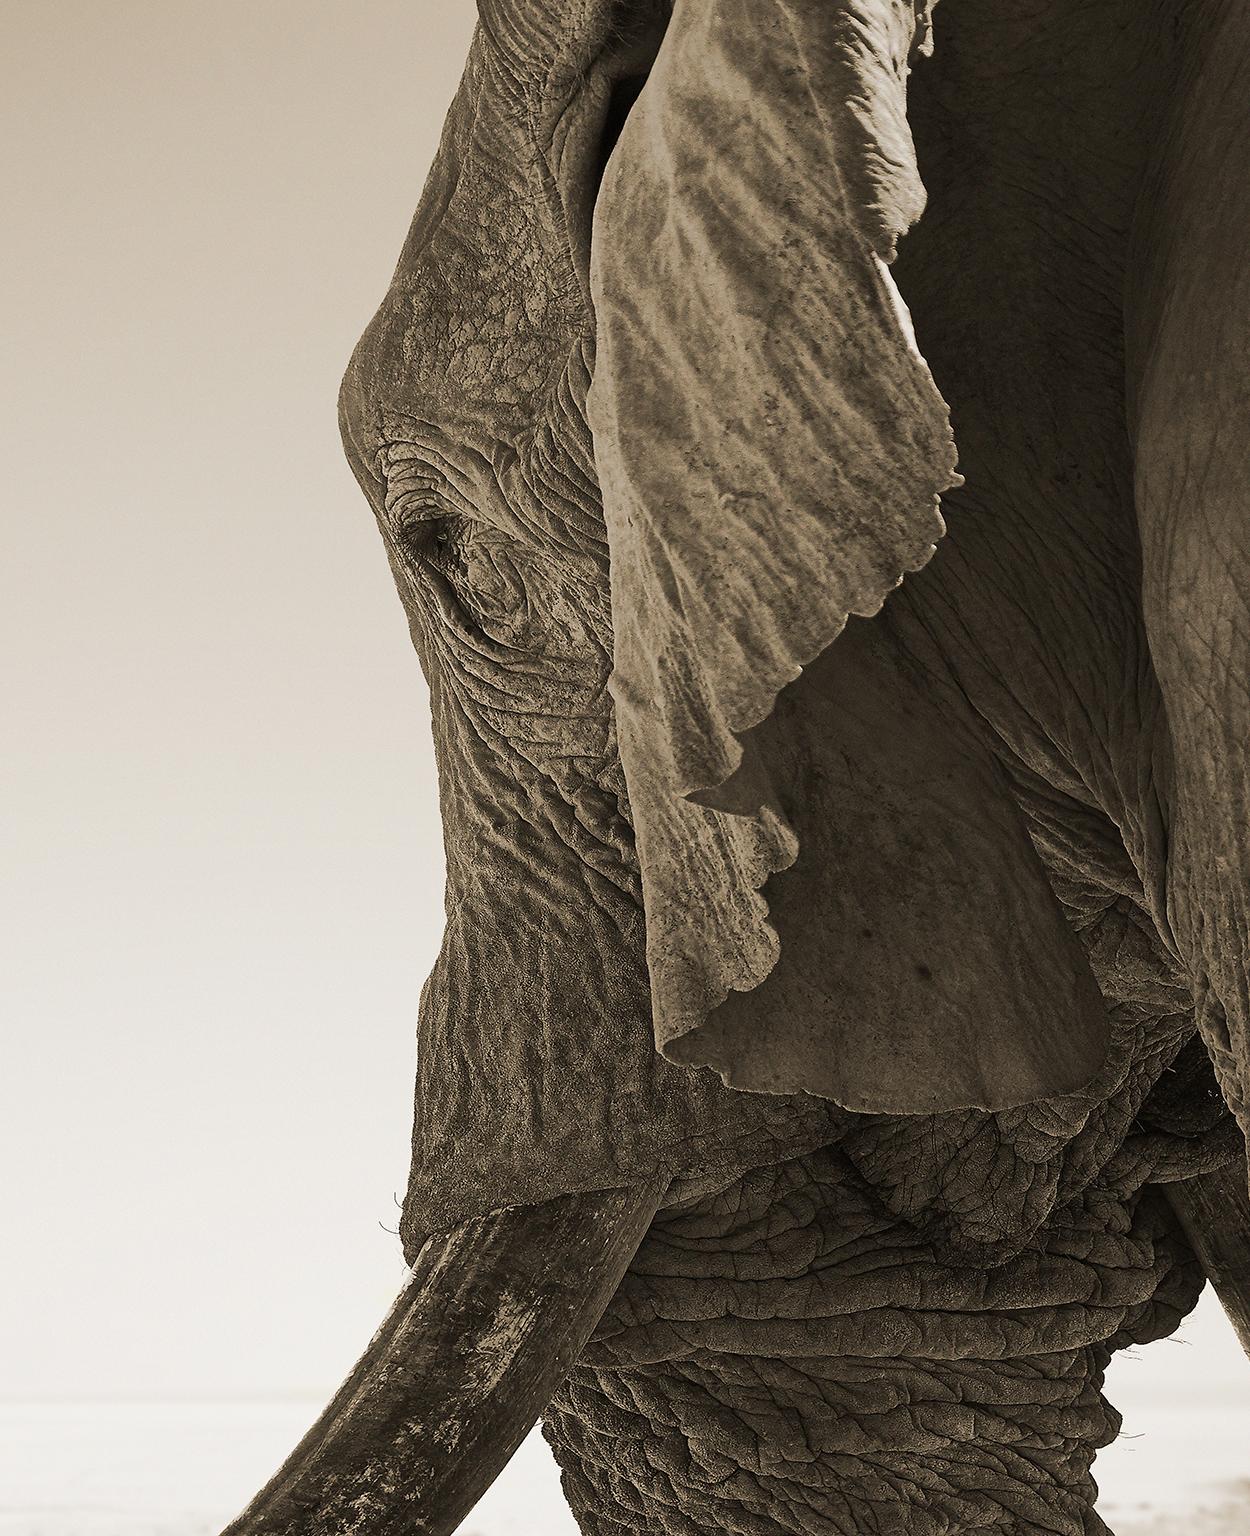 Elephant-02, Namibia - Photograph by Chris Gordaneer